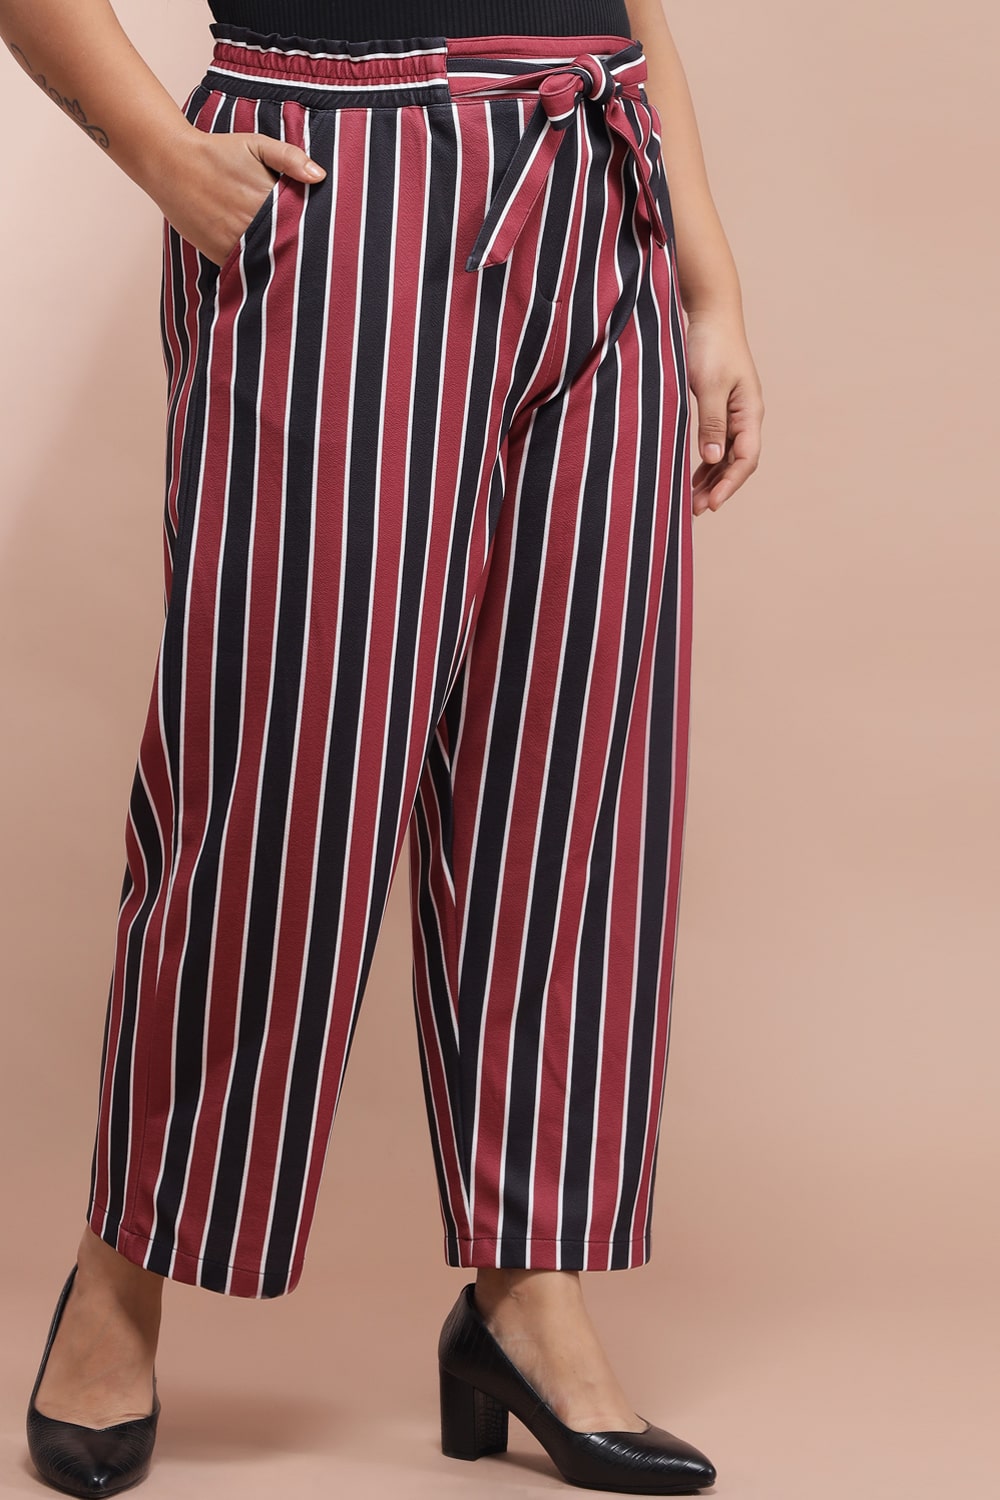 Stripe Pants Womens : Target